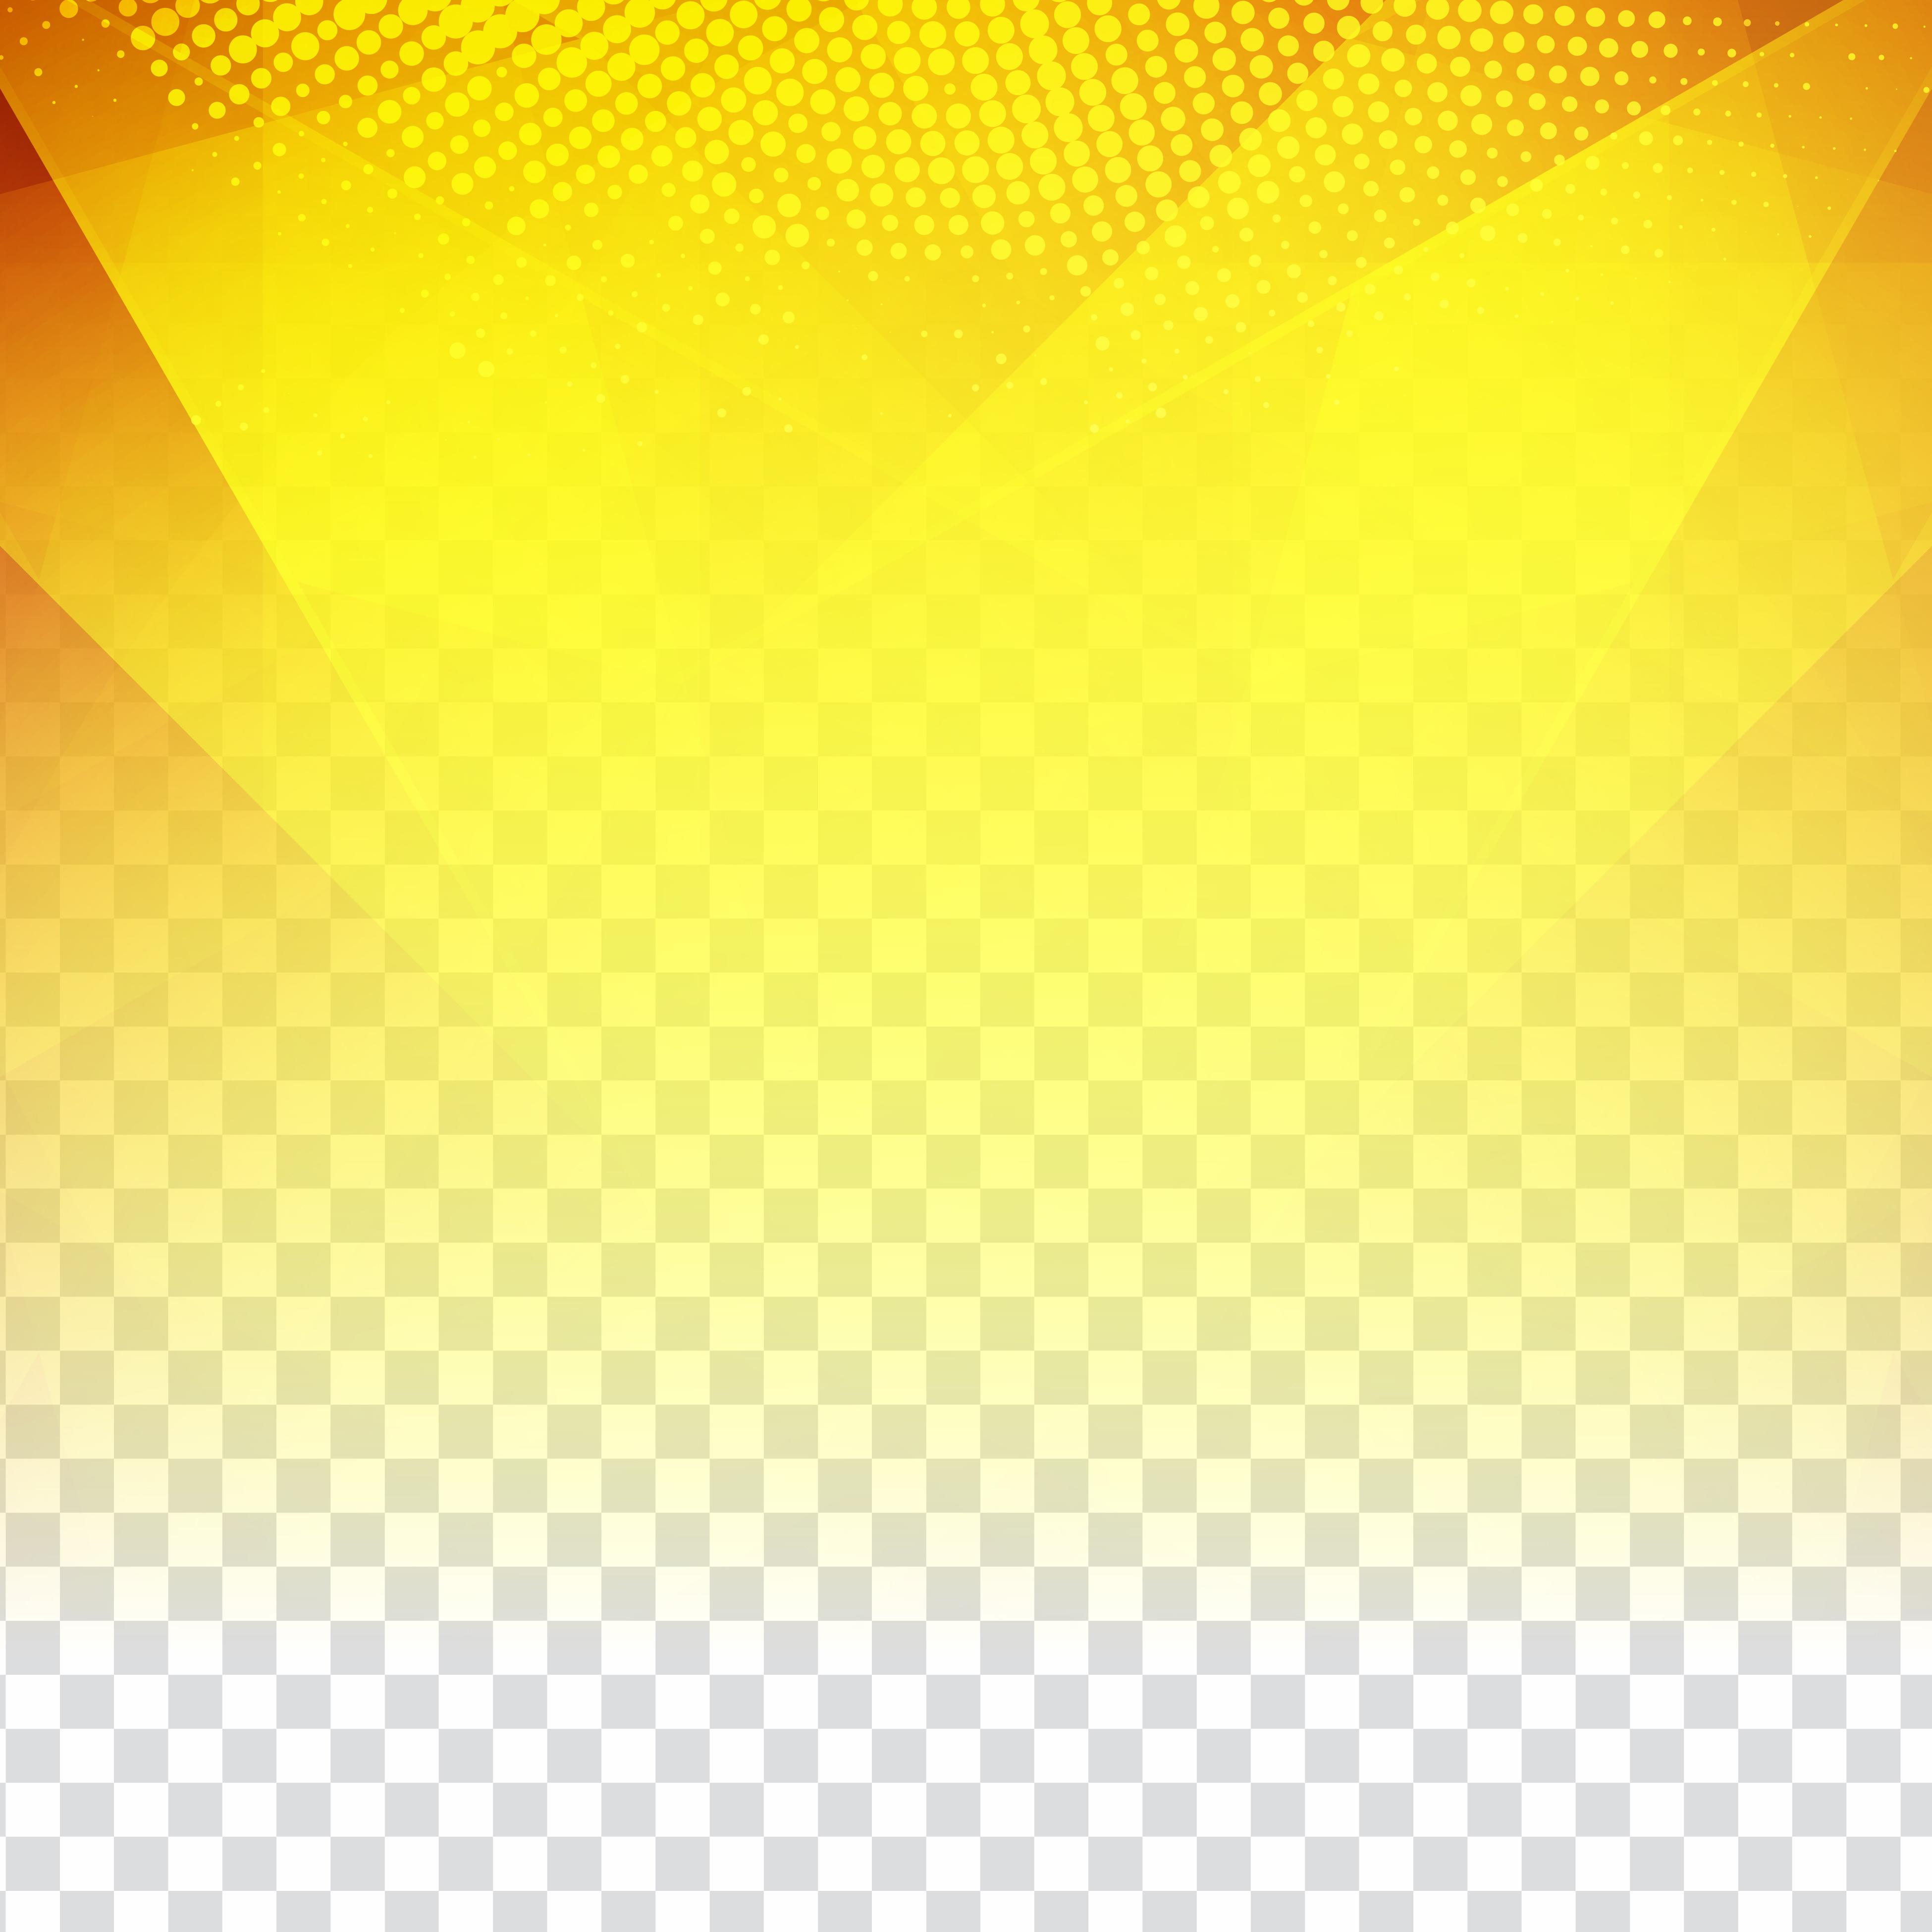 3900 x 3900 · jpeg - Abstract modern yellow geometric polygonal background 261572 - Download ...